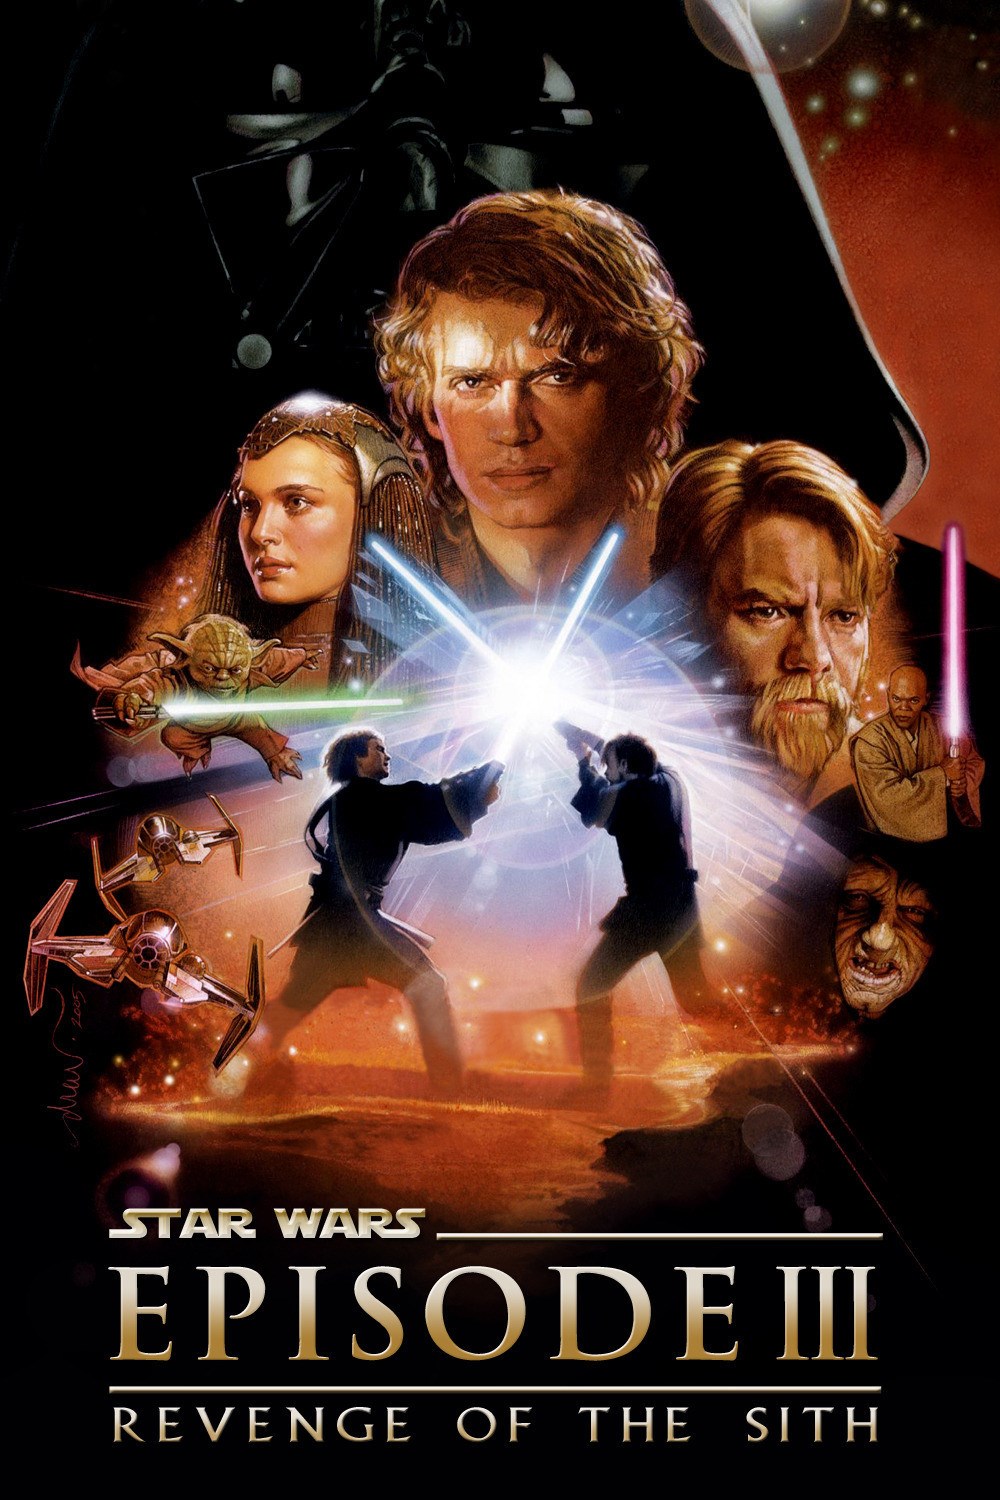 Star Wars: The Clone Wars subtitles